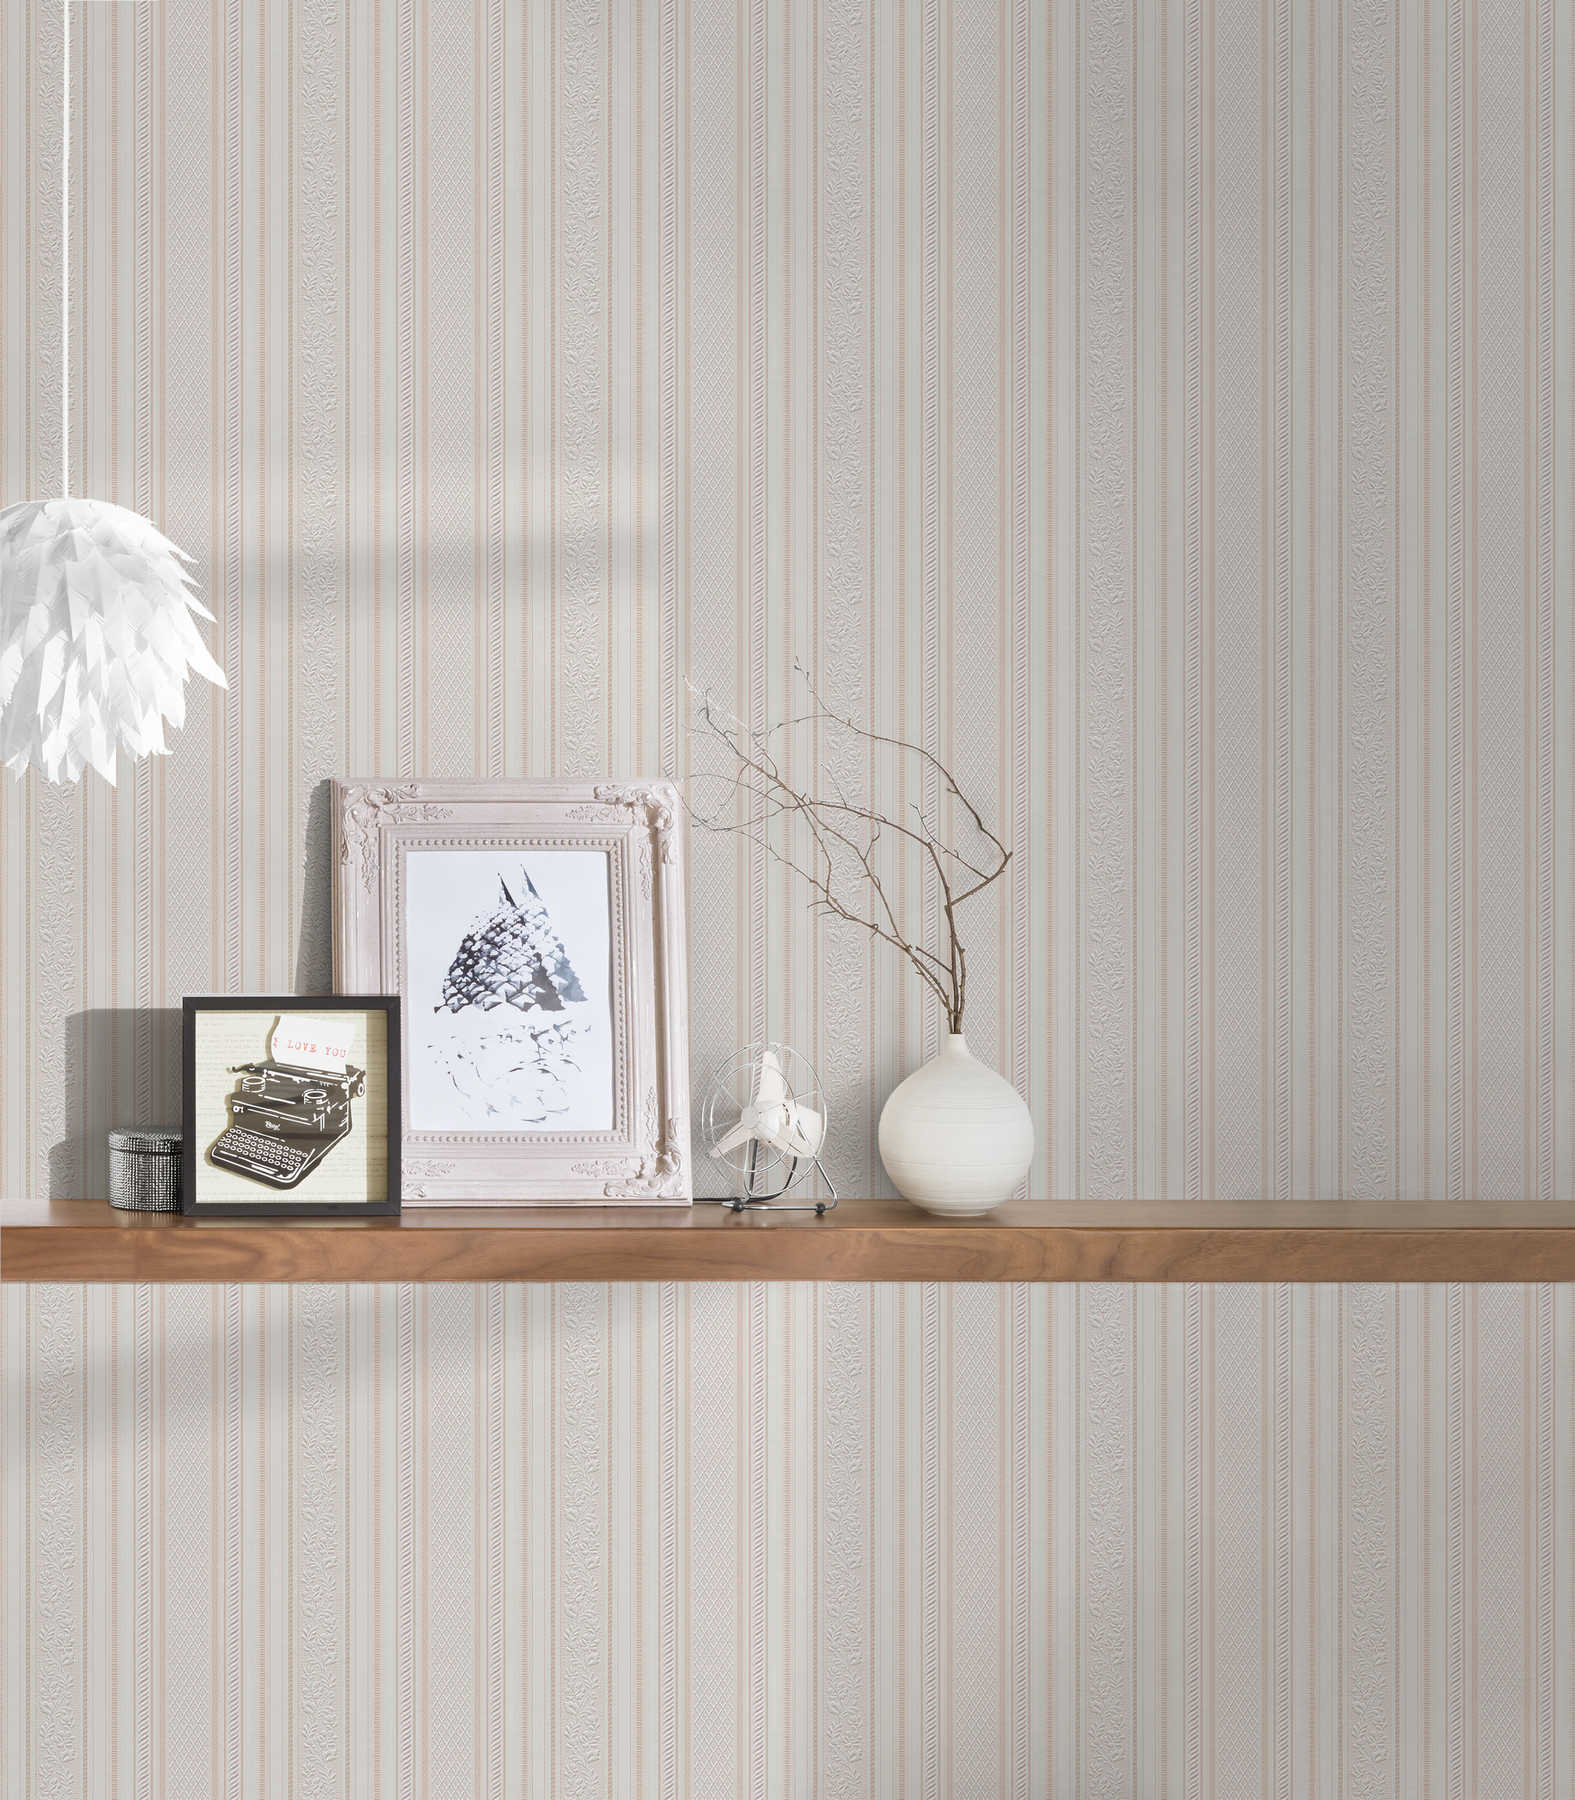             Striped wallpaper with design ornaments Biedermeier style - beige, cream, white
        